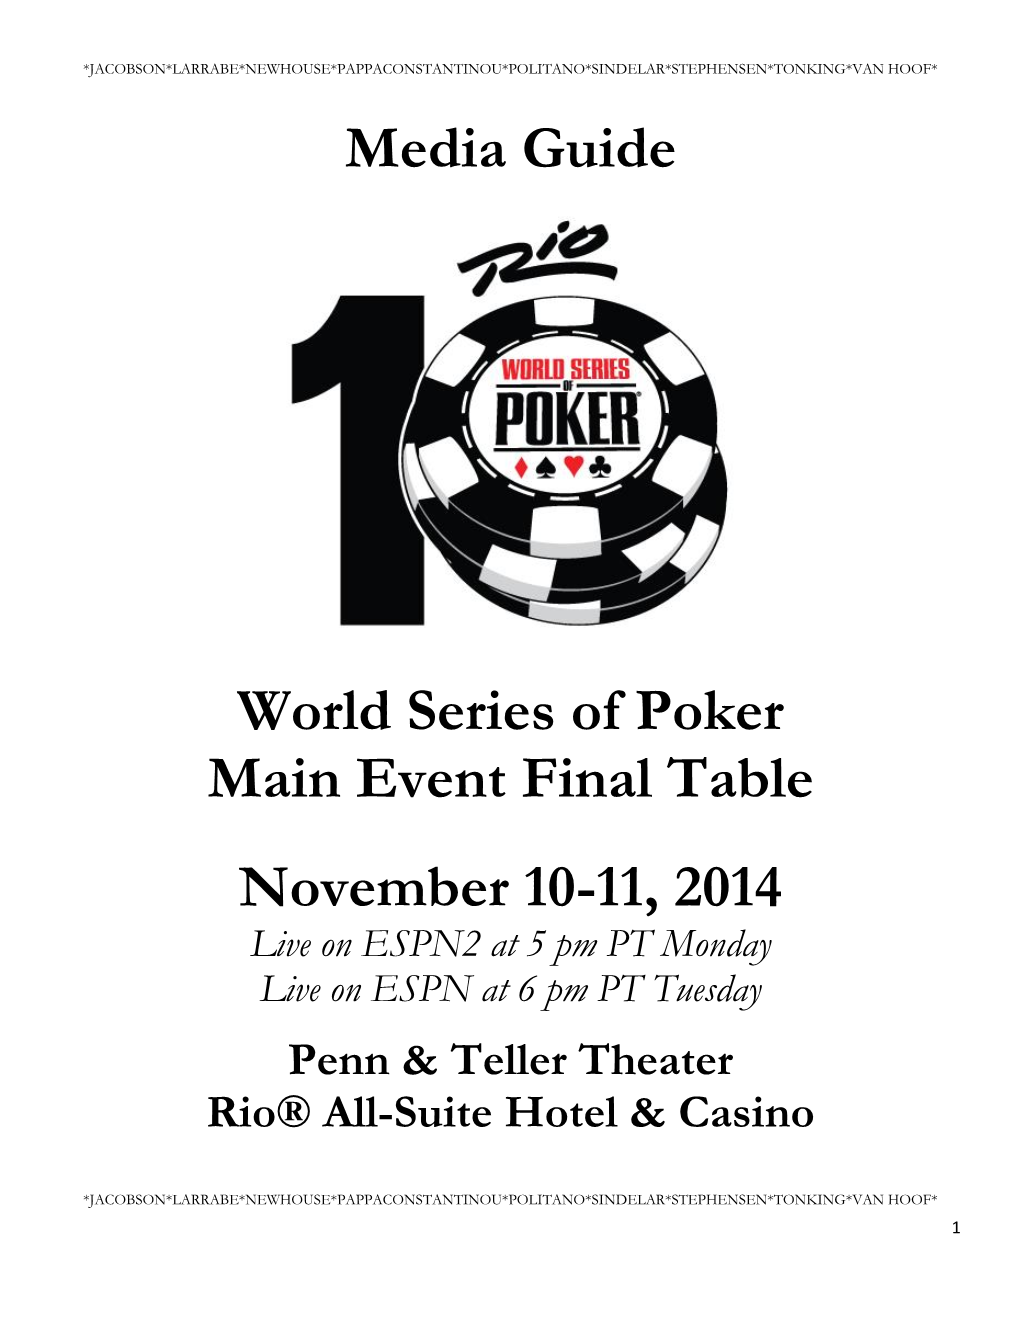 Media Guide World Series of Poker Main Event Final Table November 10-11, 2014